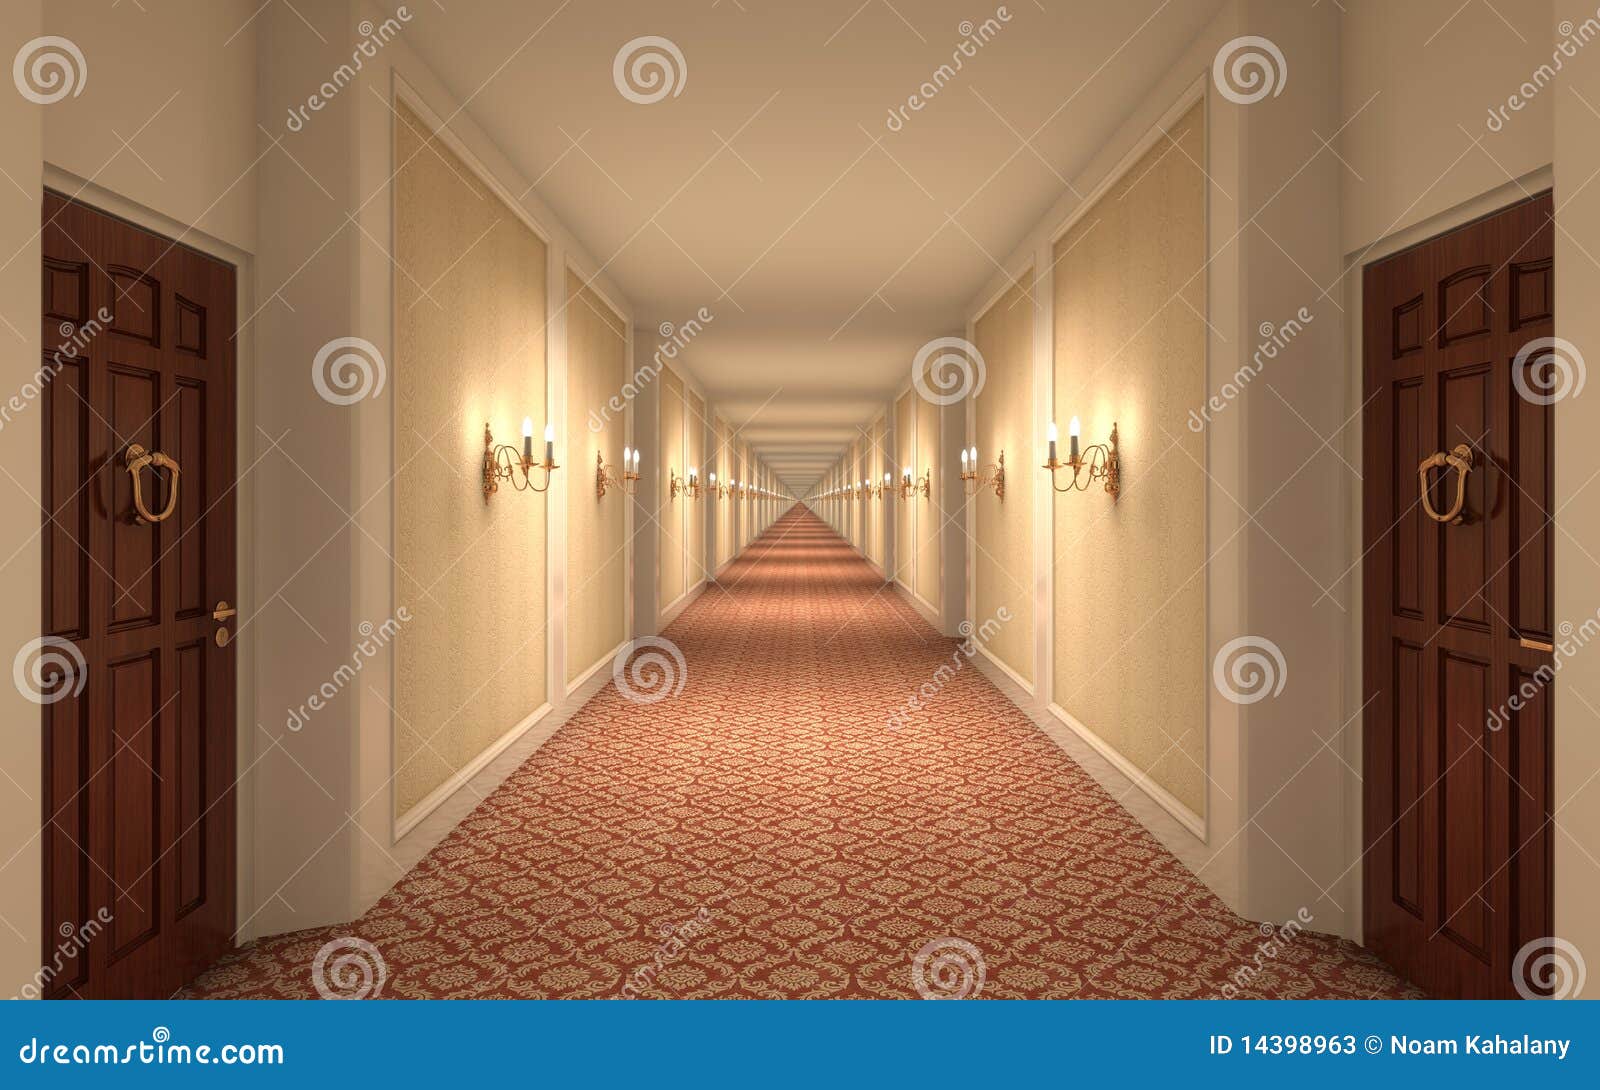 endless hotel corridor